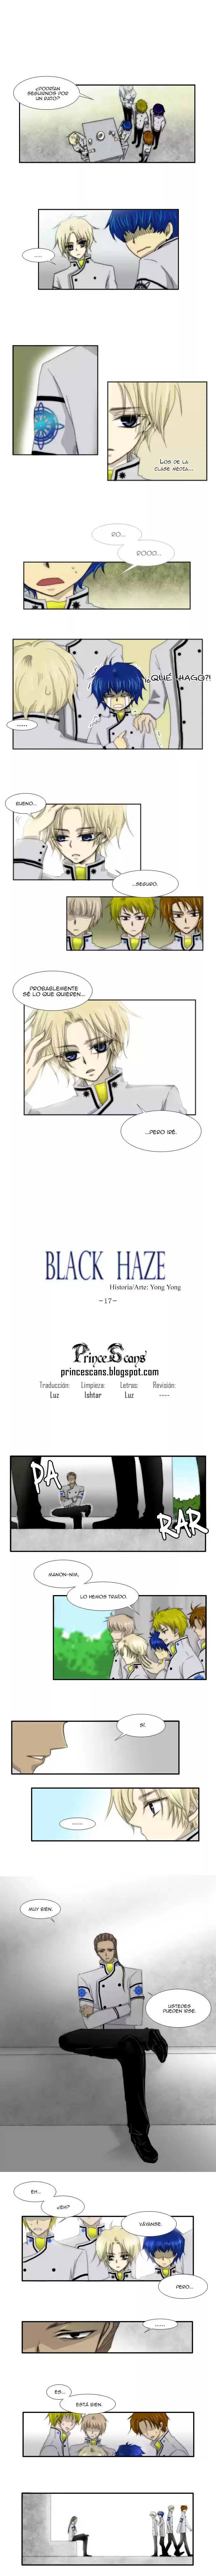 Black Haze: Chapter 17 - Page 1